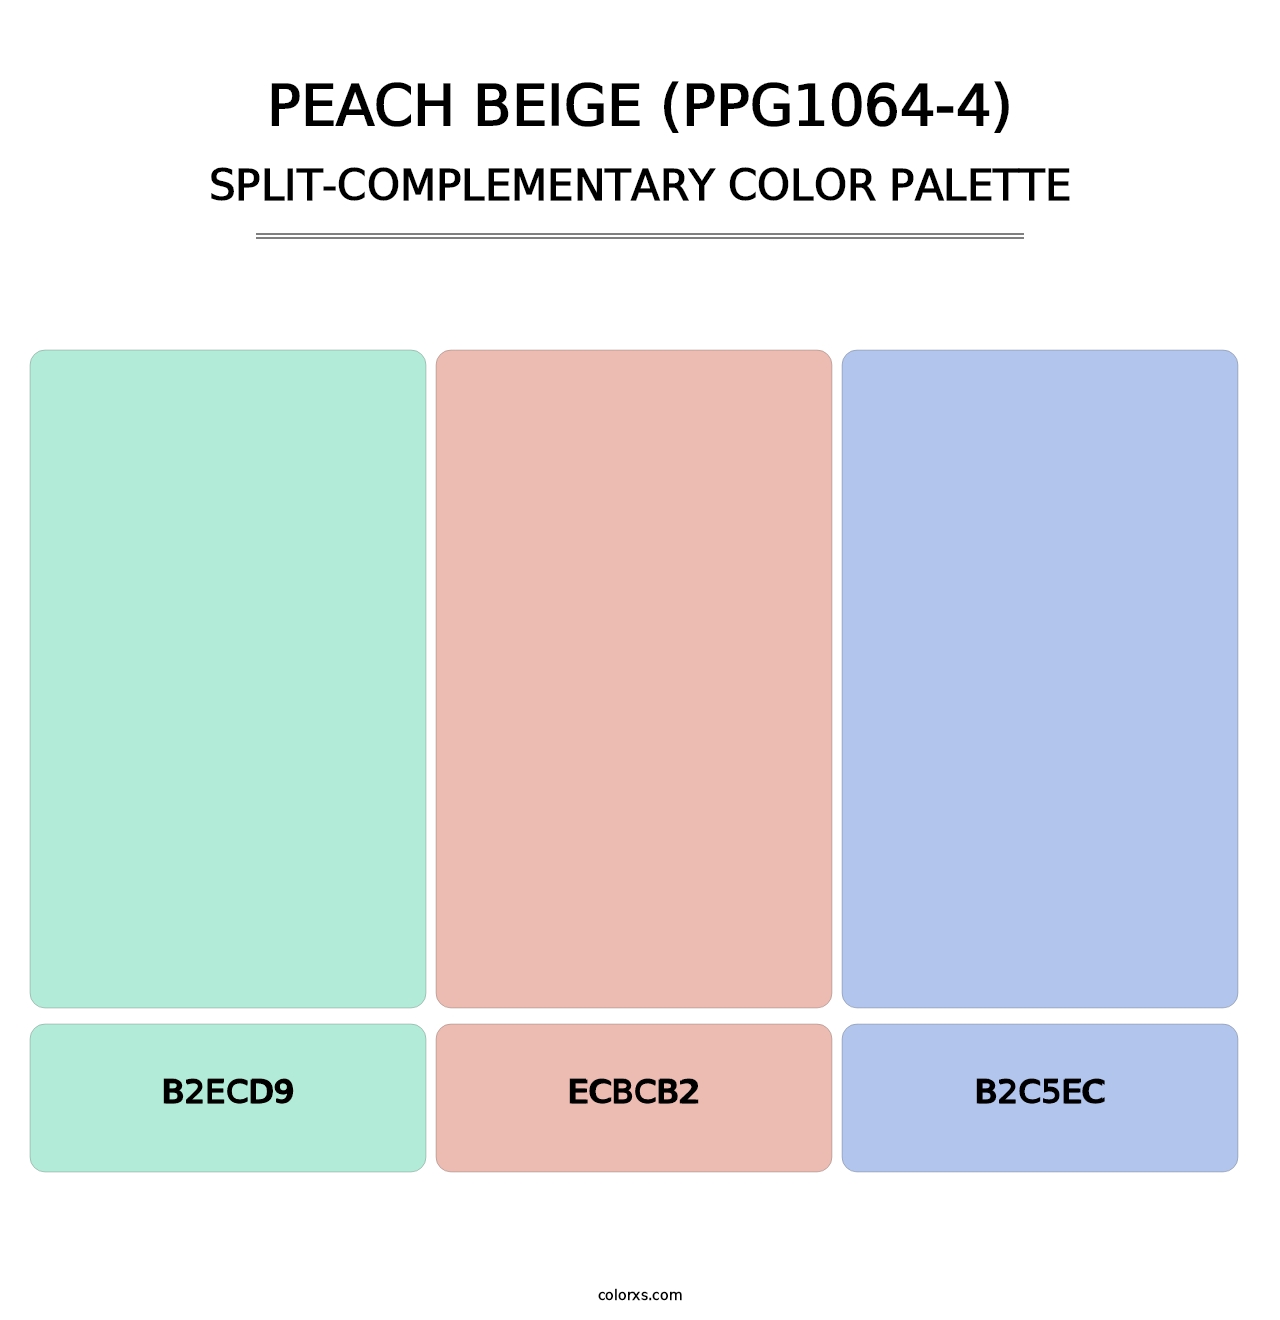 Peach Beige (PPG1064-4) - Split-Complementary Color Palette